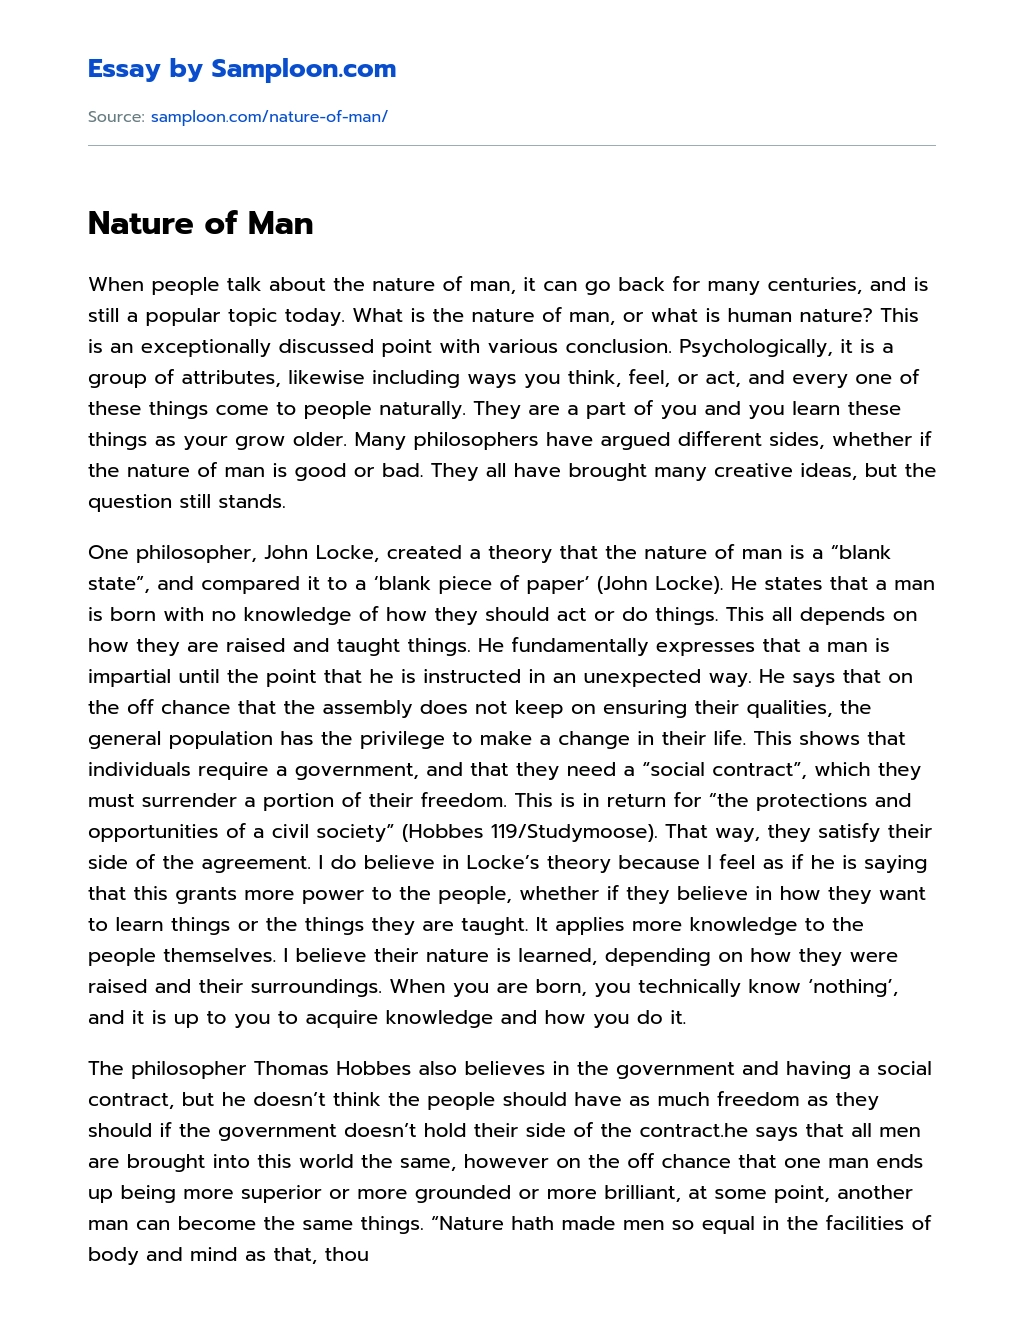 Nature of Man Personal Essay essay